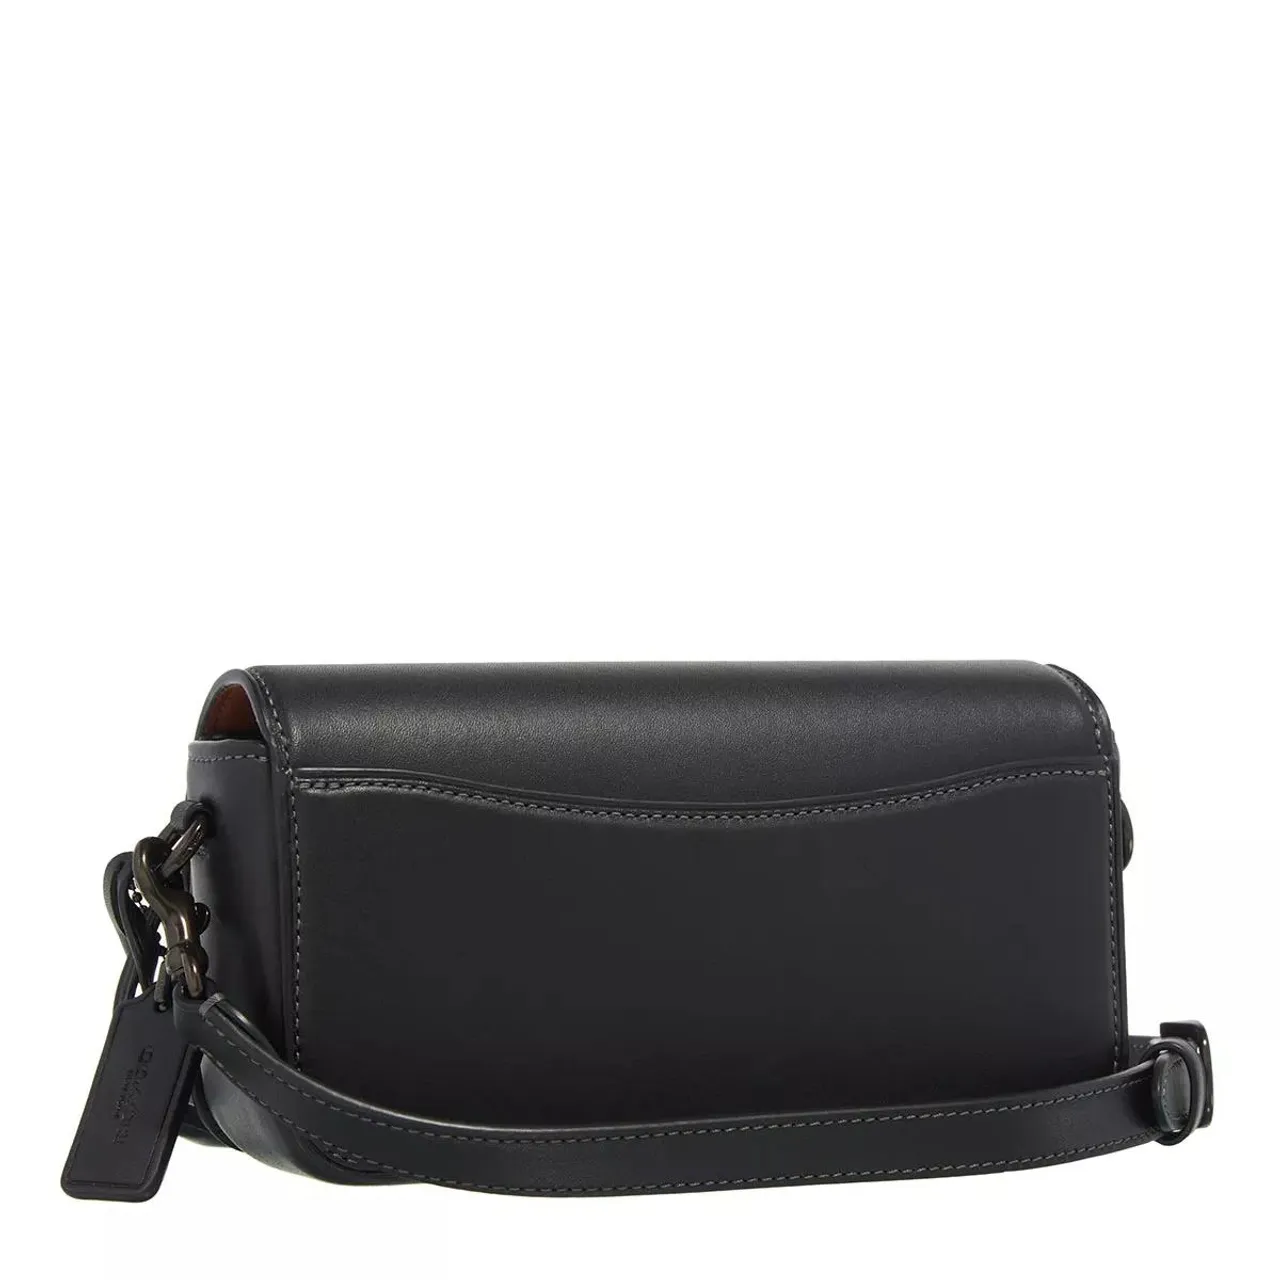 Coach Hobo Bags - Glovetanned Leather Studio Shoulder Bag - black - Hobo Bags for ladies